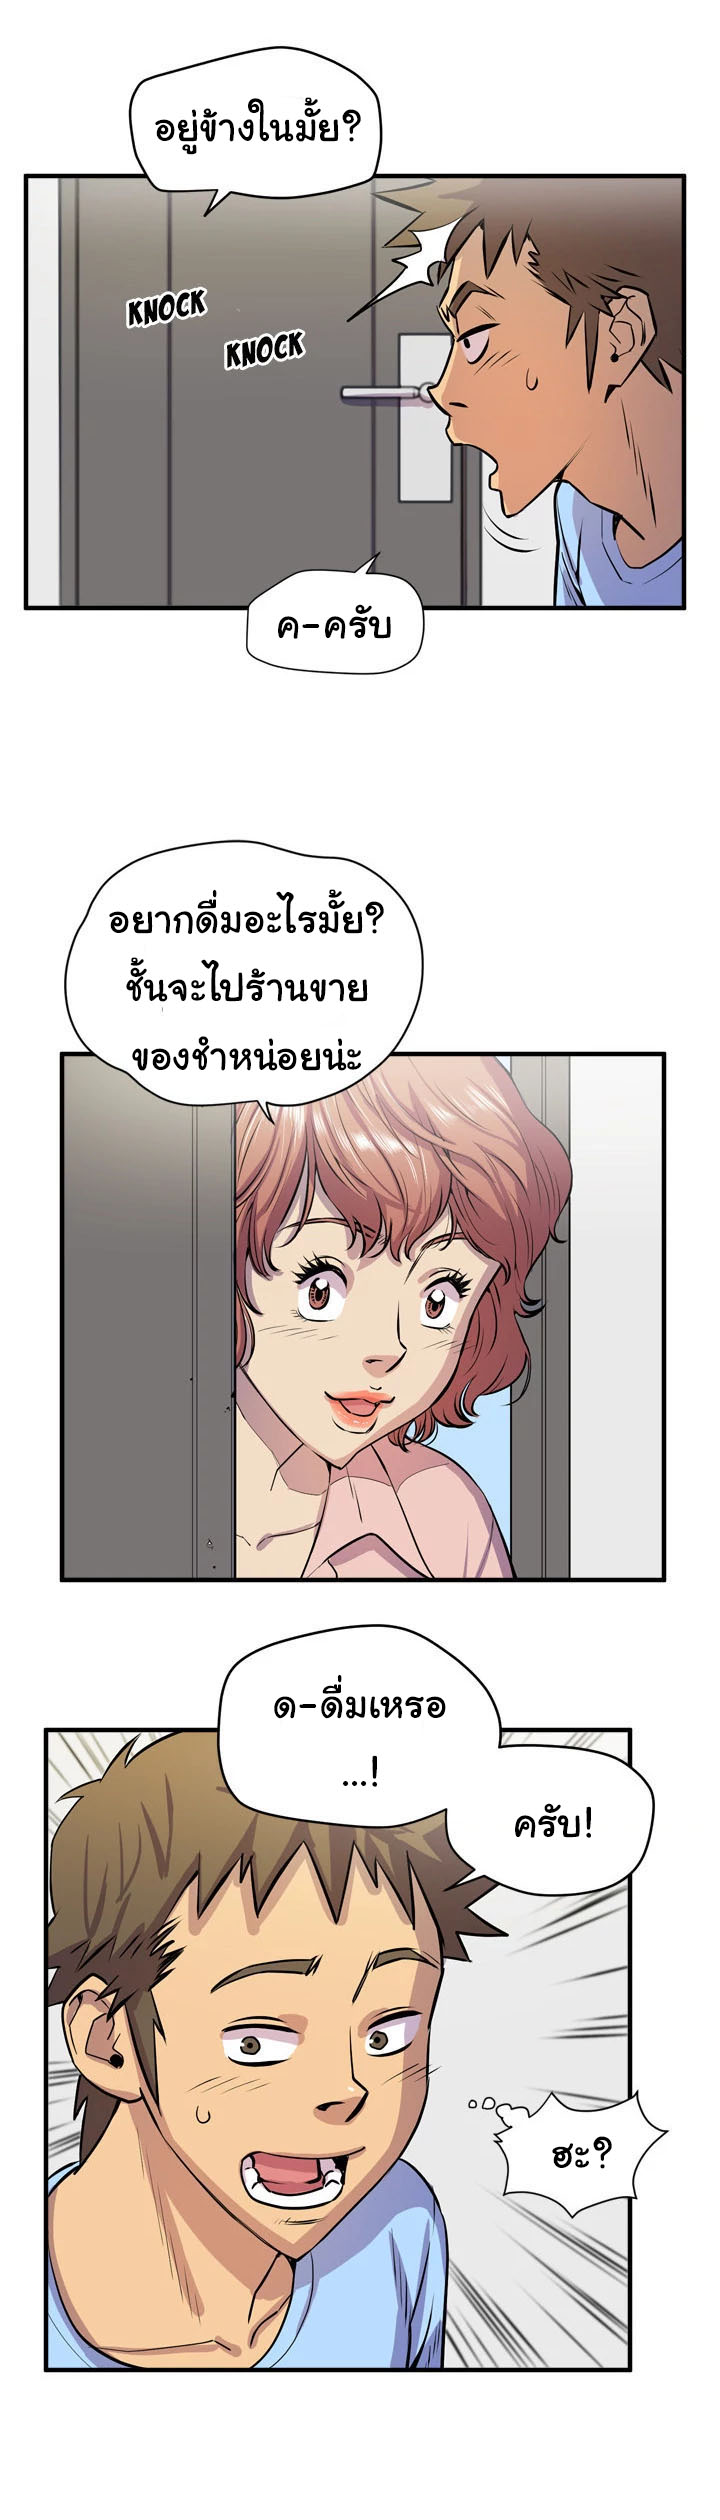 webtoon translate ไทย จํากัด